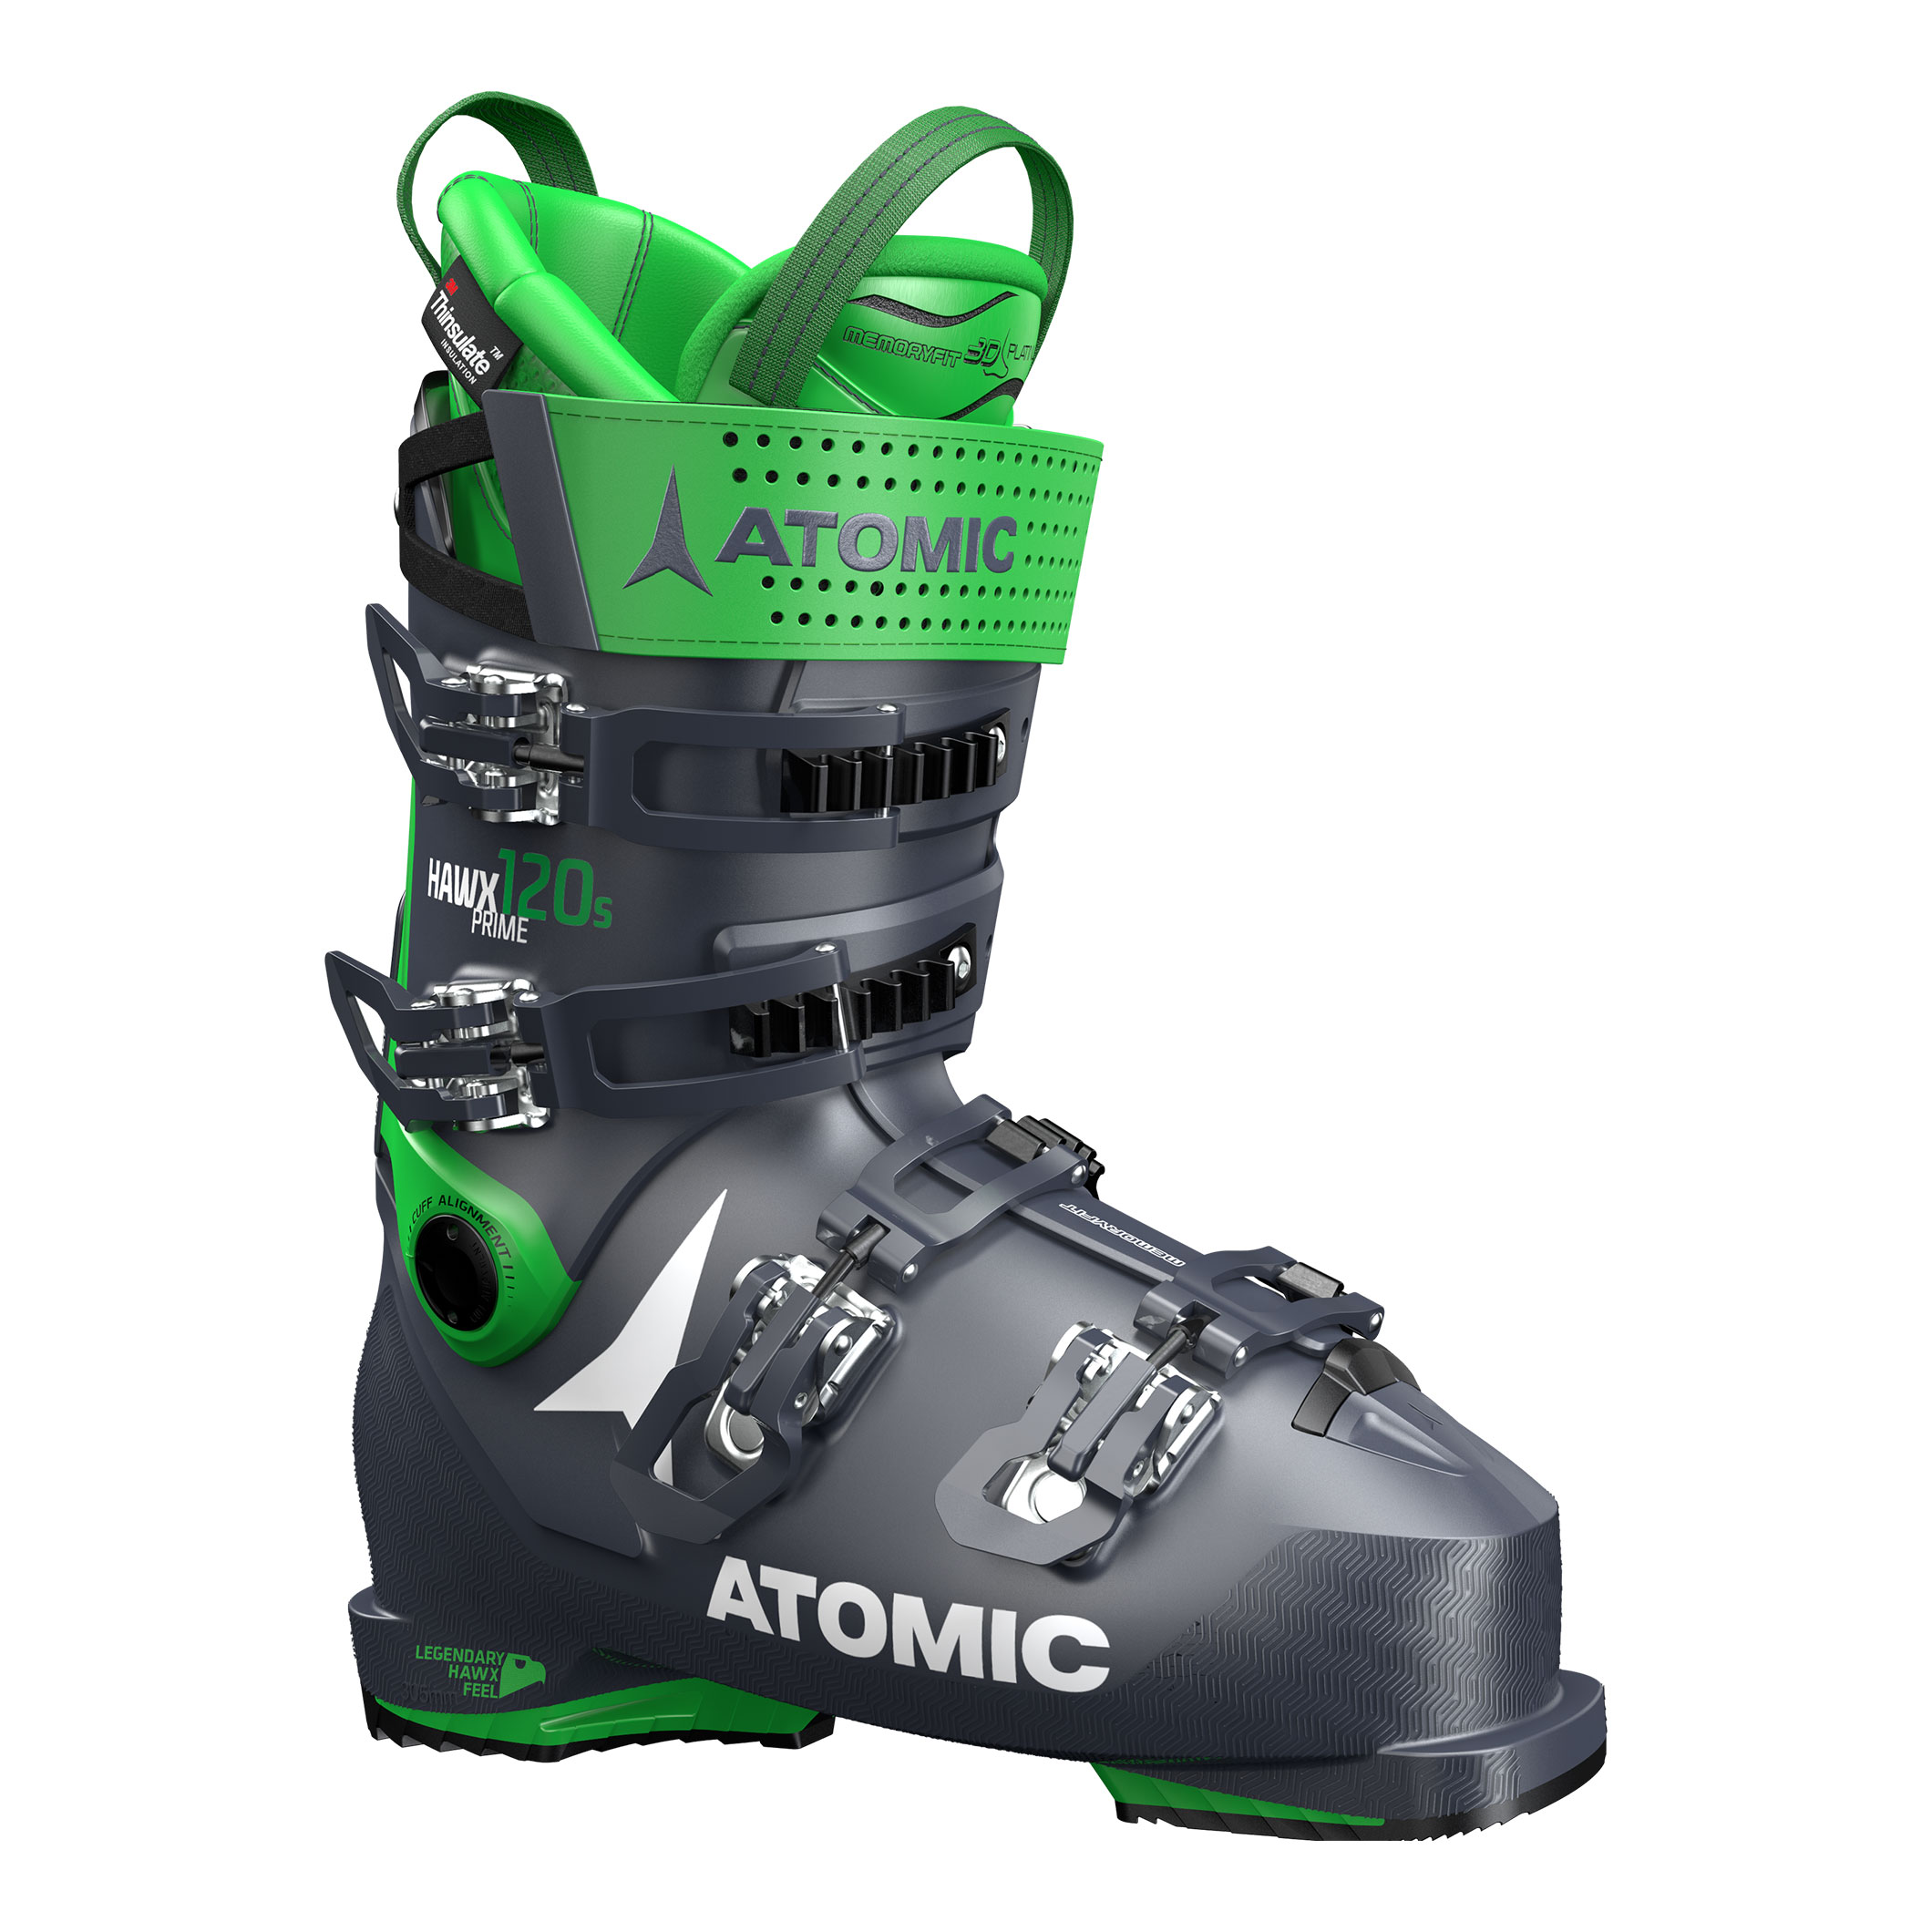 Ski Boots -  atomic Hawx Prime 120 S